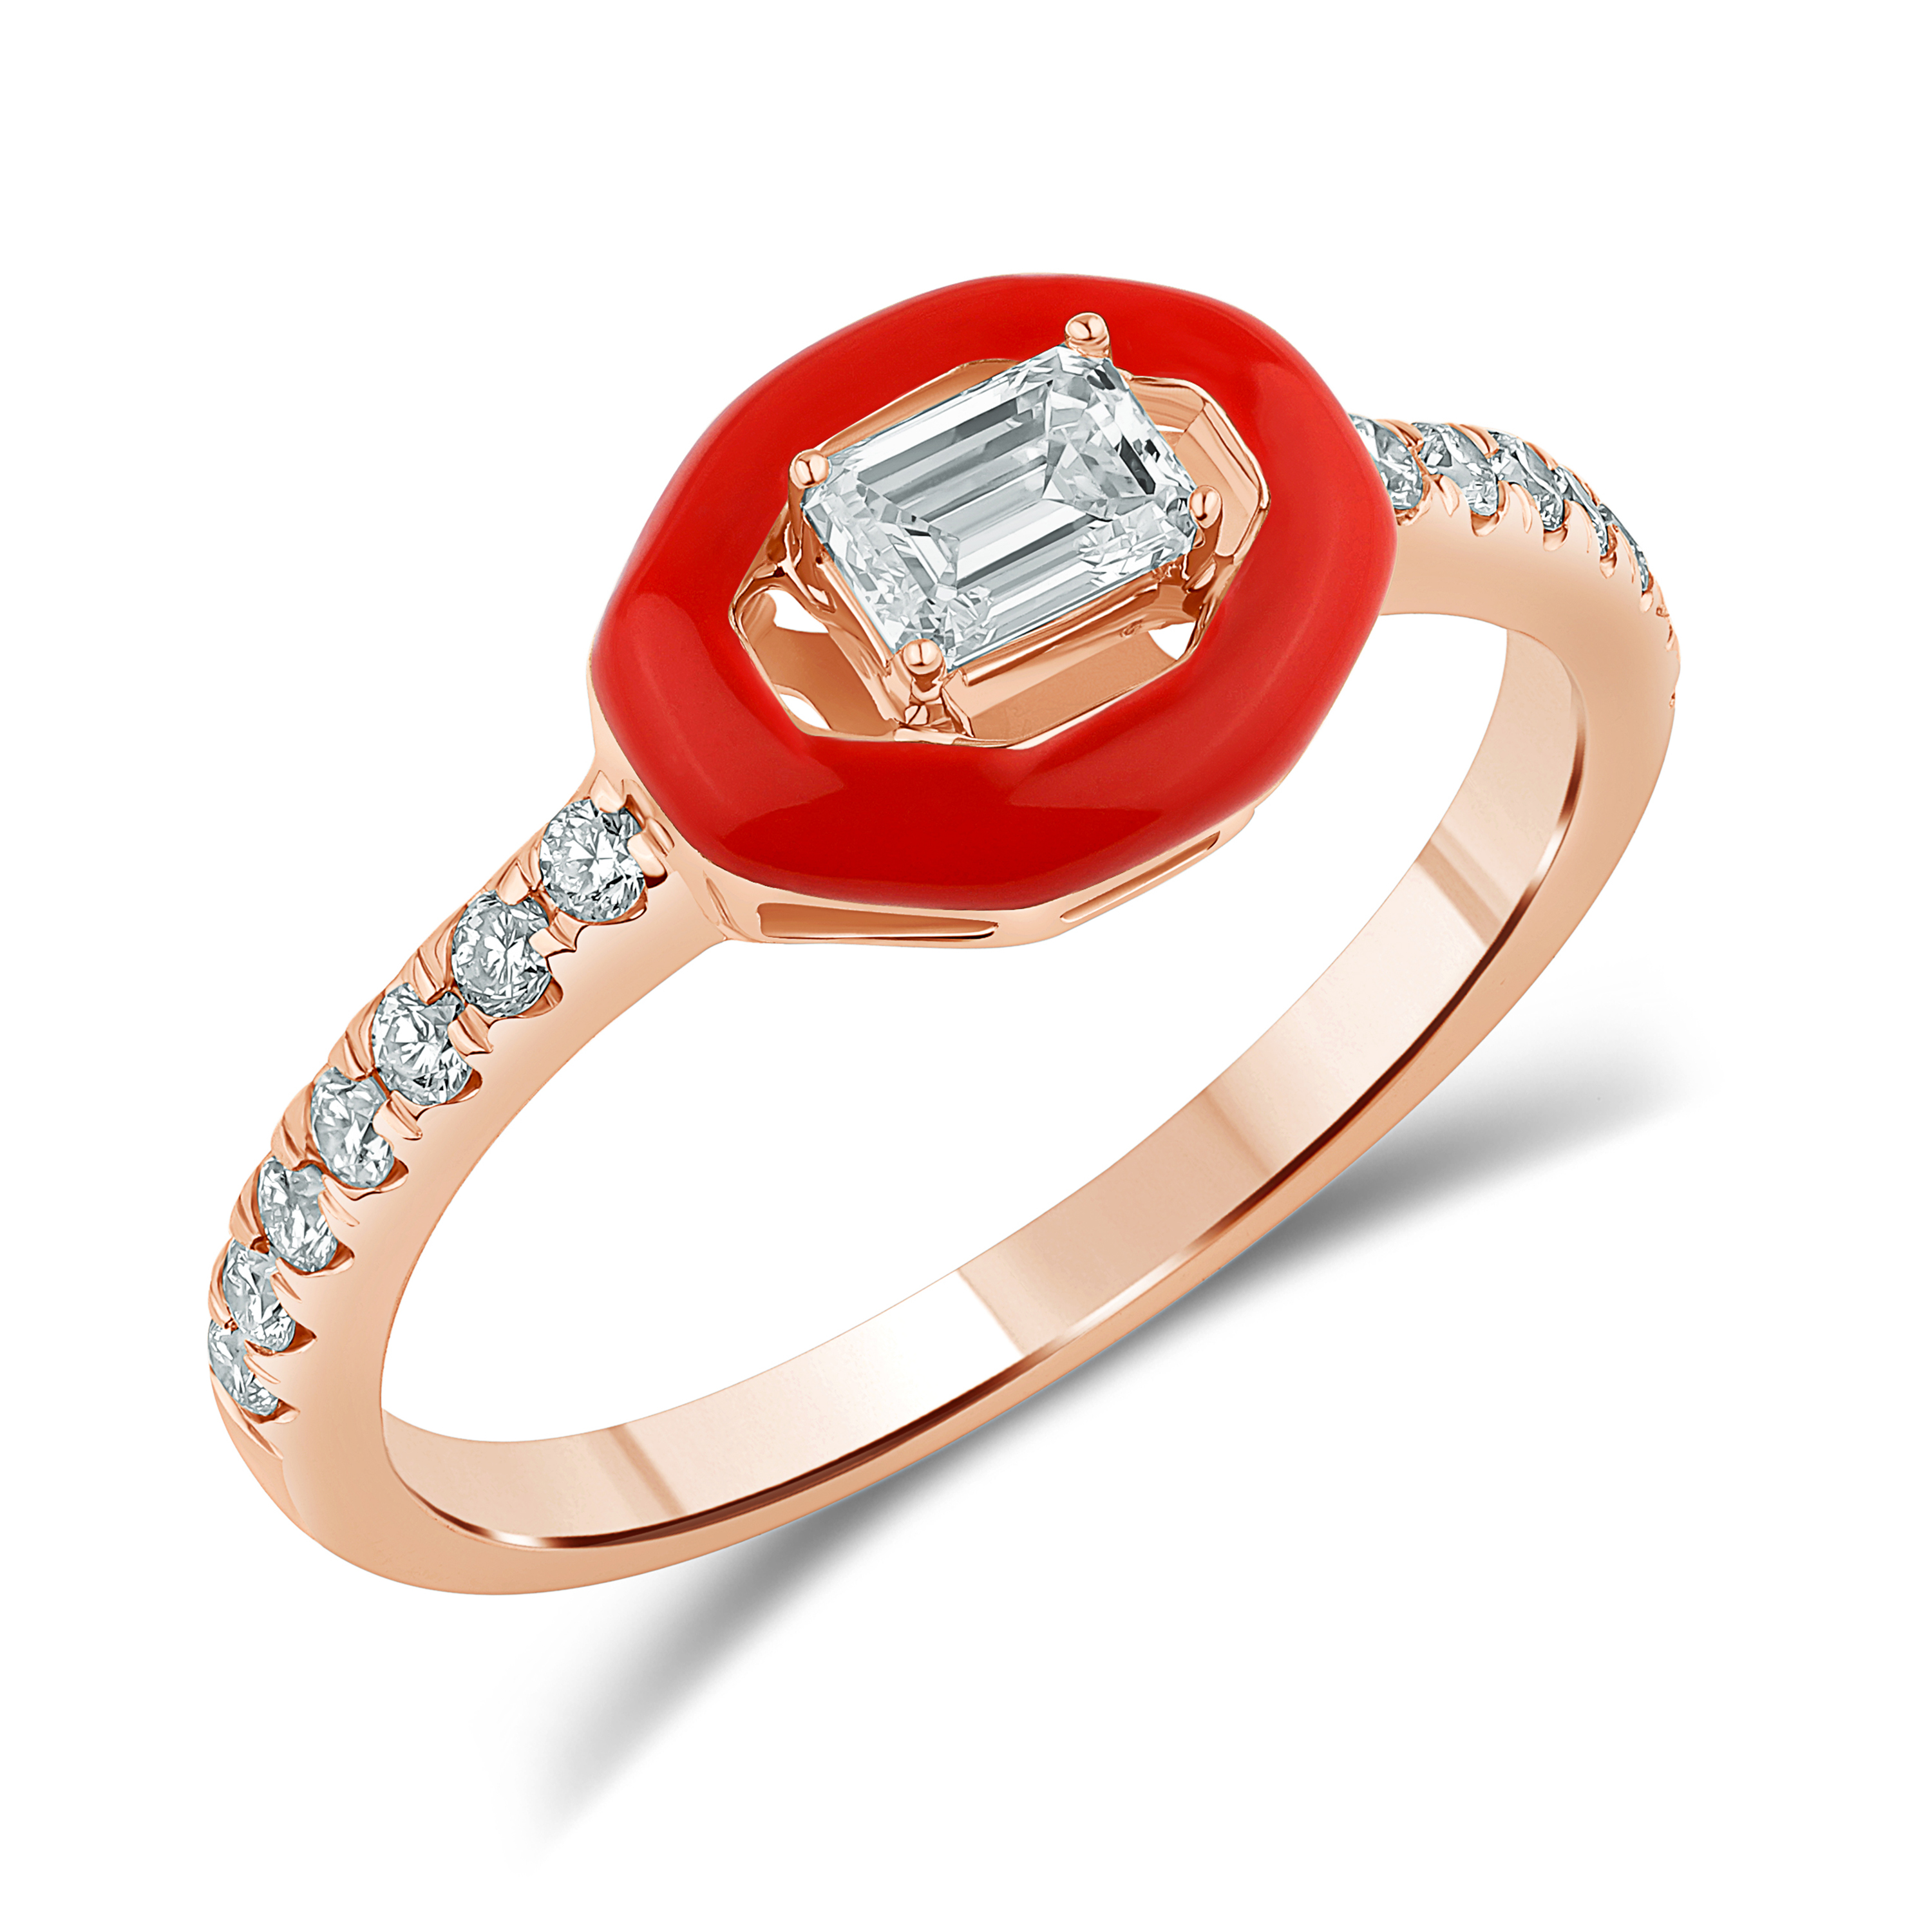 HE53182Q4RLG 14K rose gold emerald cut diamond ring